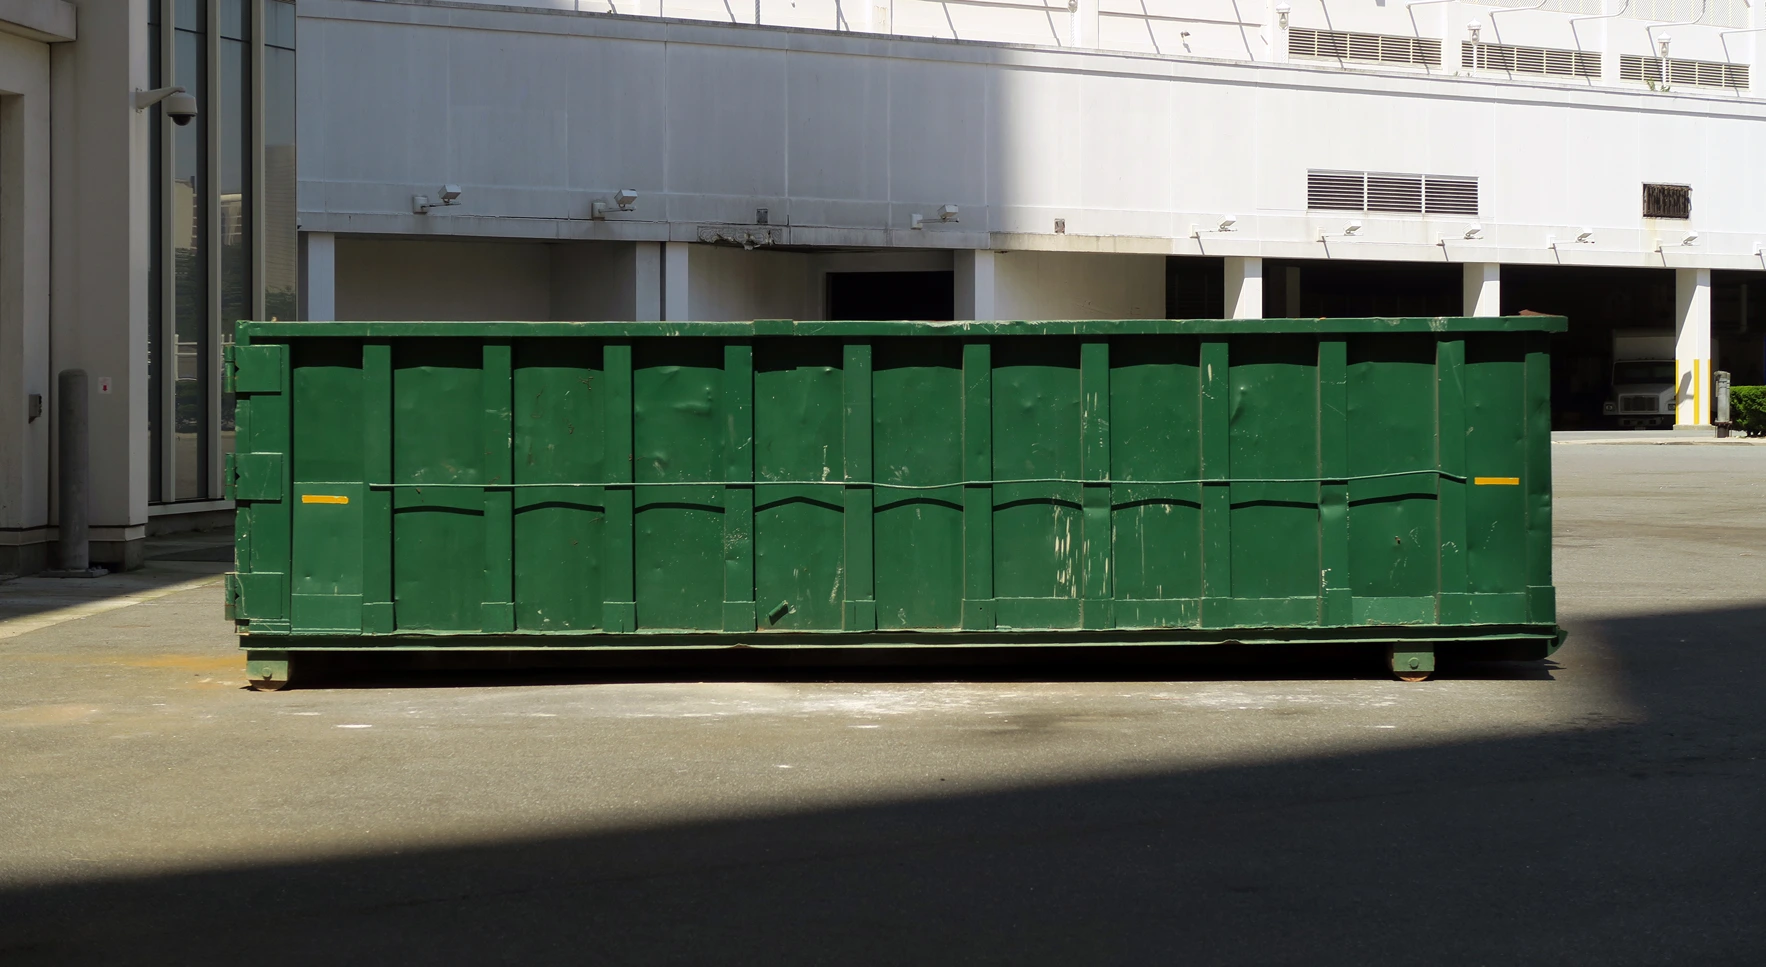 Rent a Roll Off Dumpster in Braselton, GA